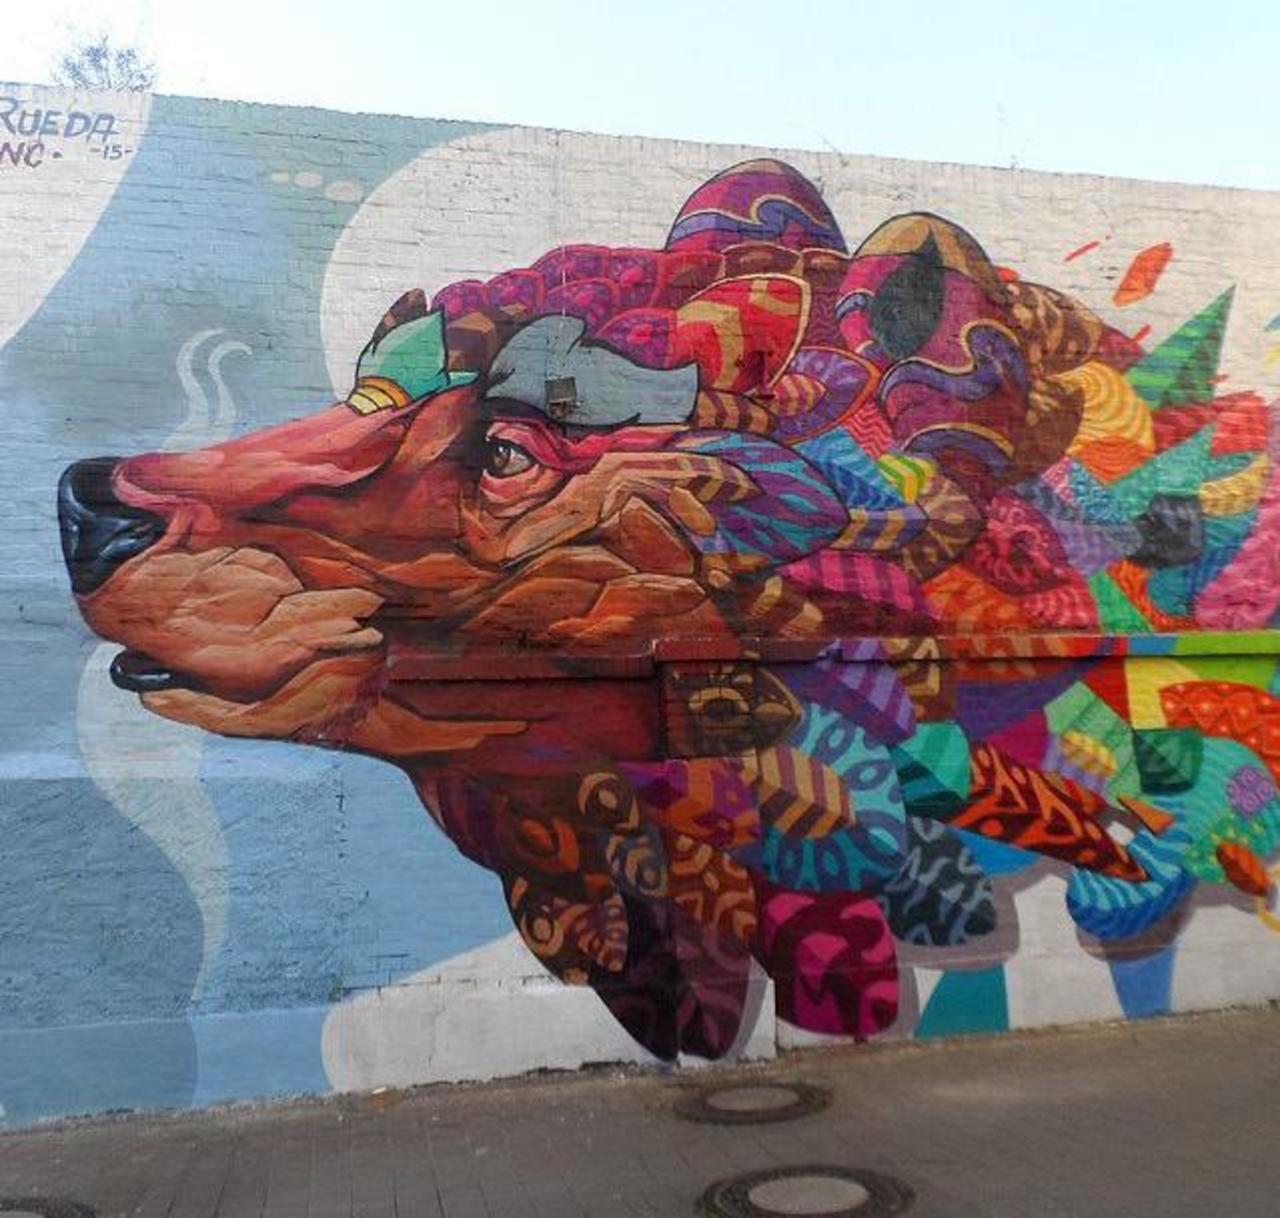 Farid Rueda Street Art 

#art #graffiti #mural #streetart http://t.co/PBK2oE3xVB